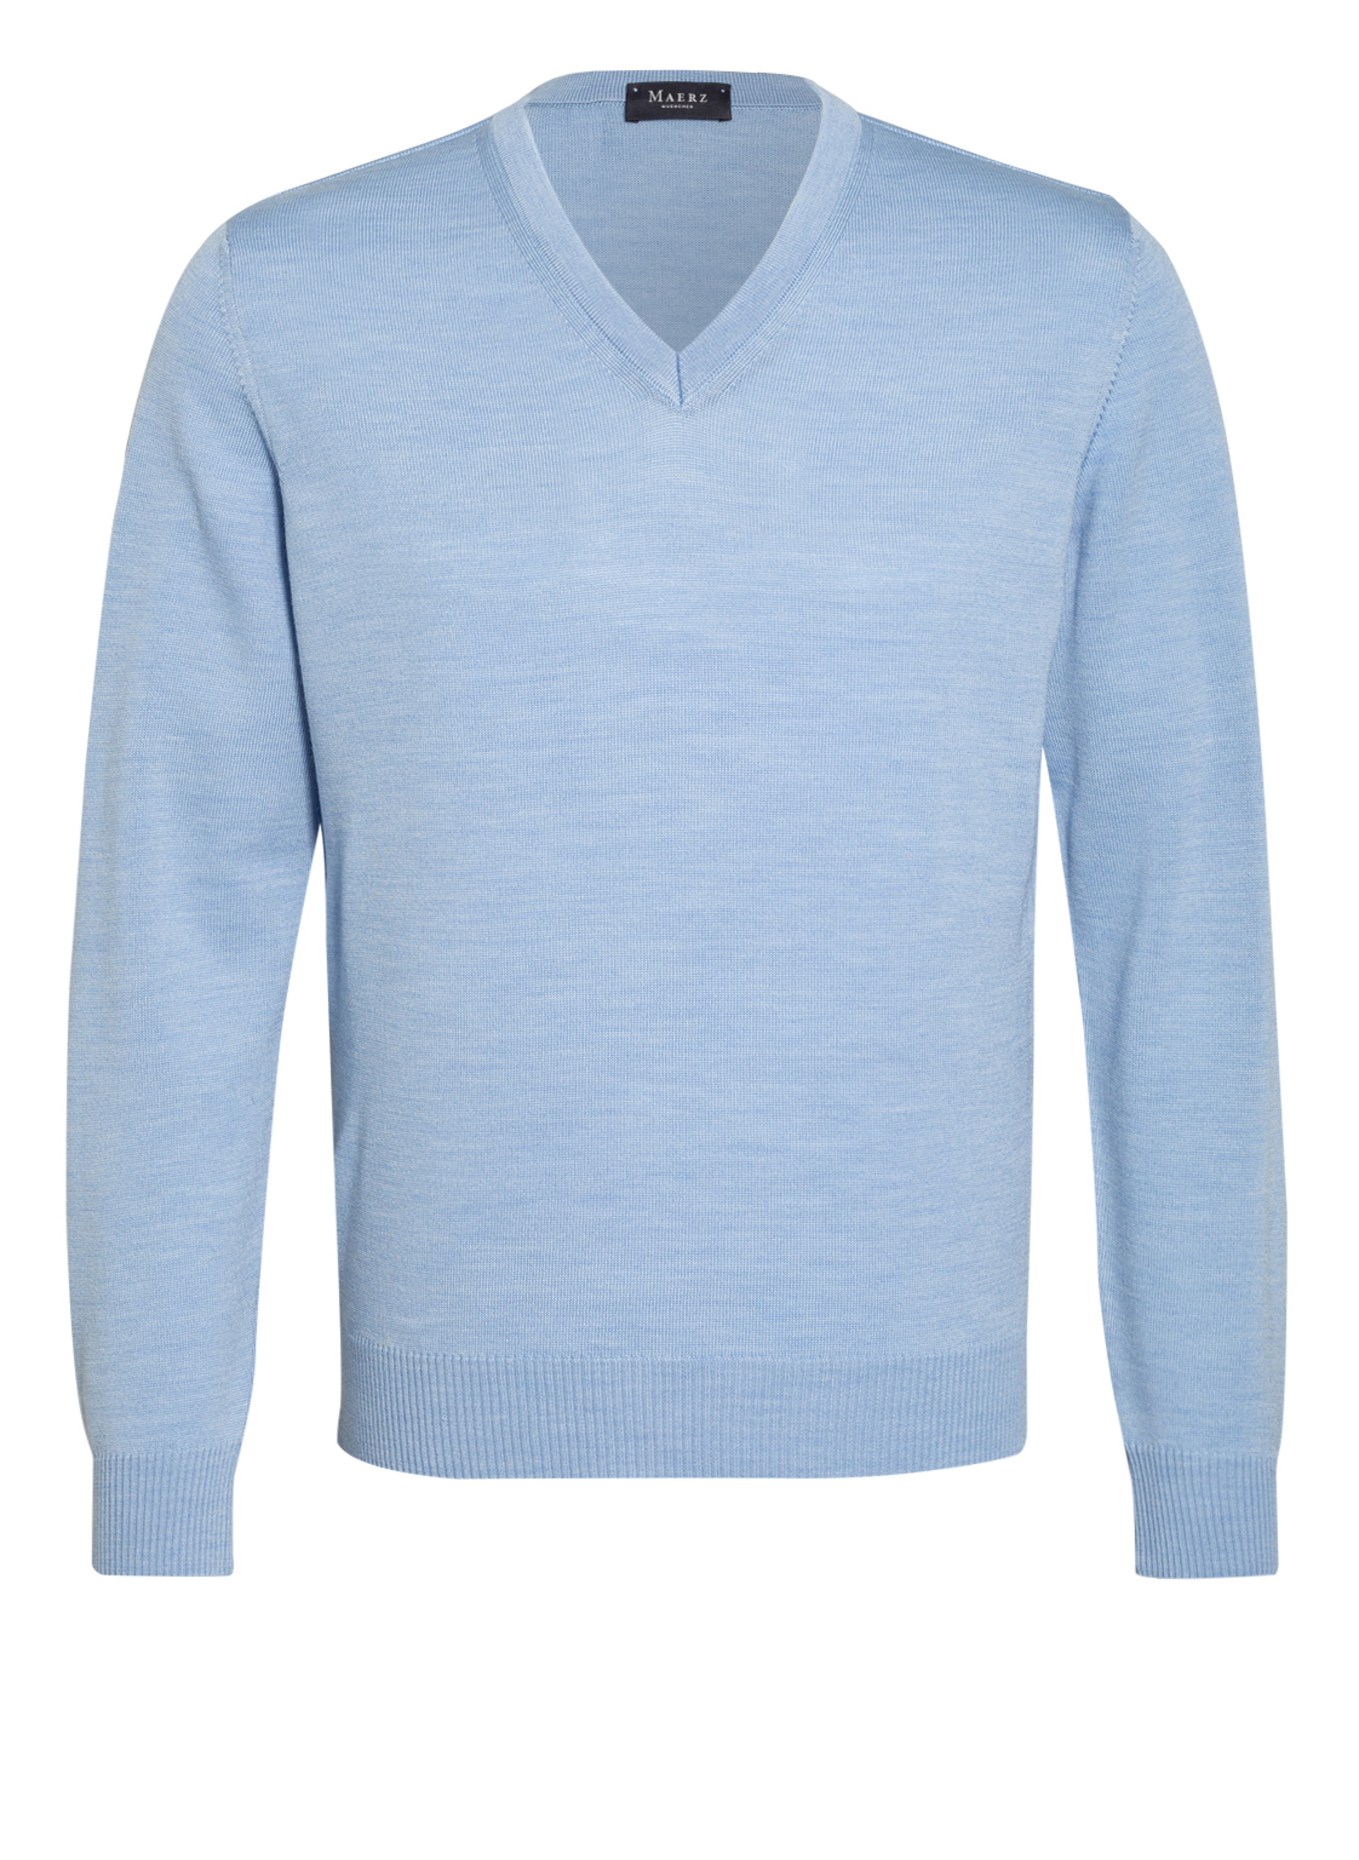 MAERZ MUENCHEN Pullover, Farbe: HELLBLAU (Bild 1)